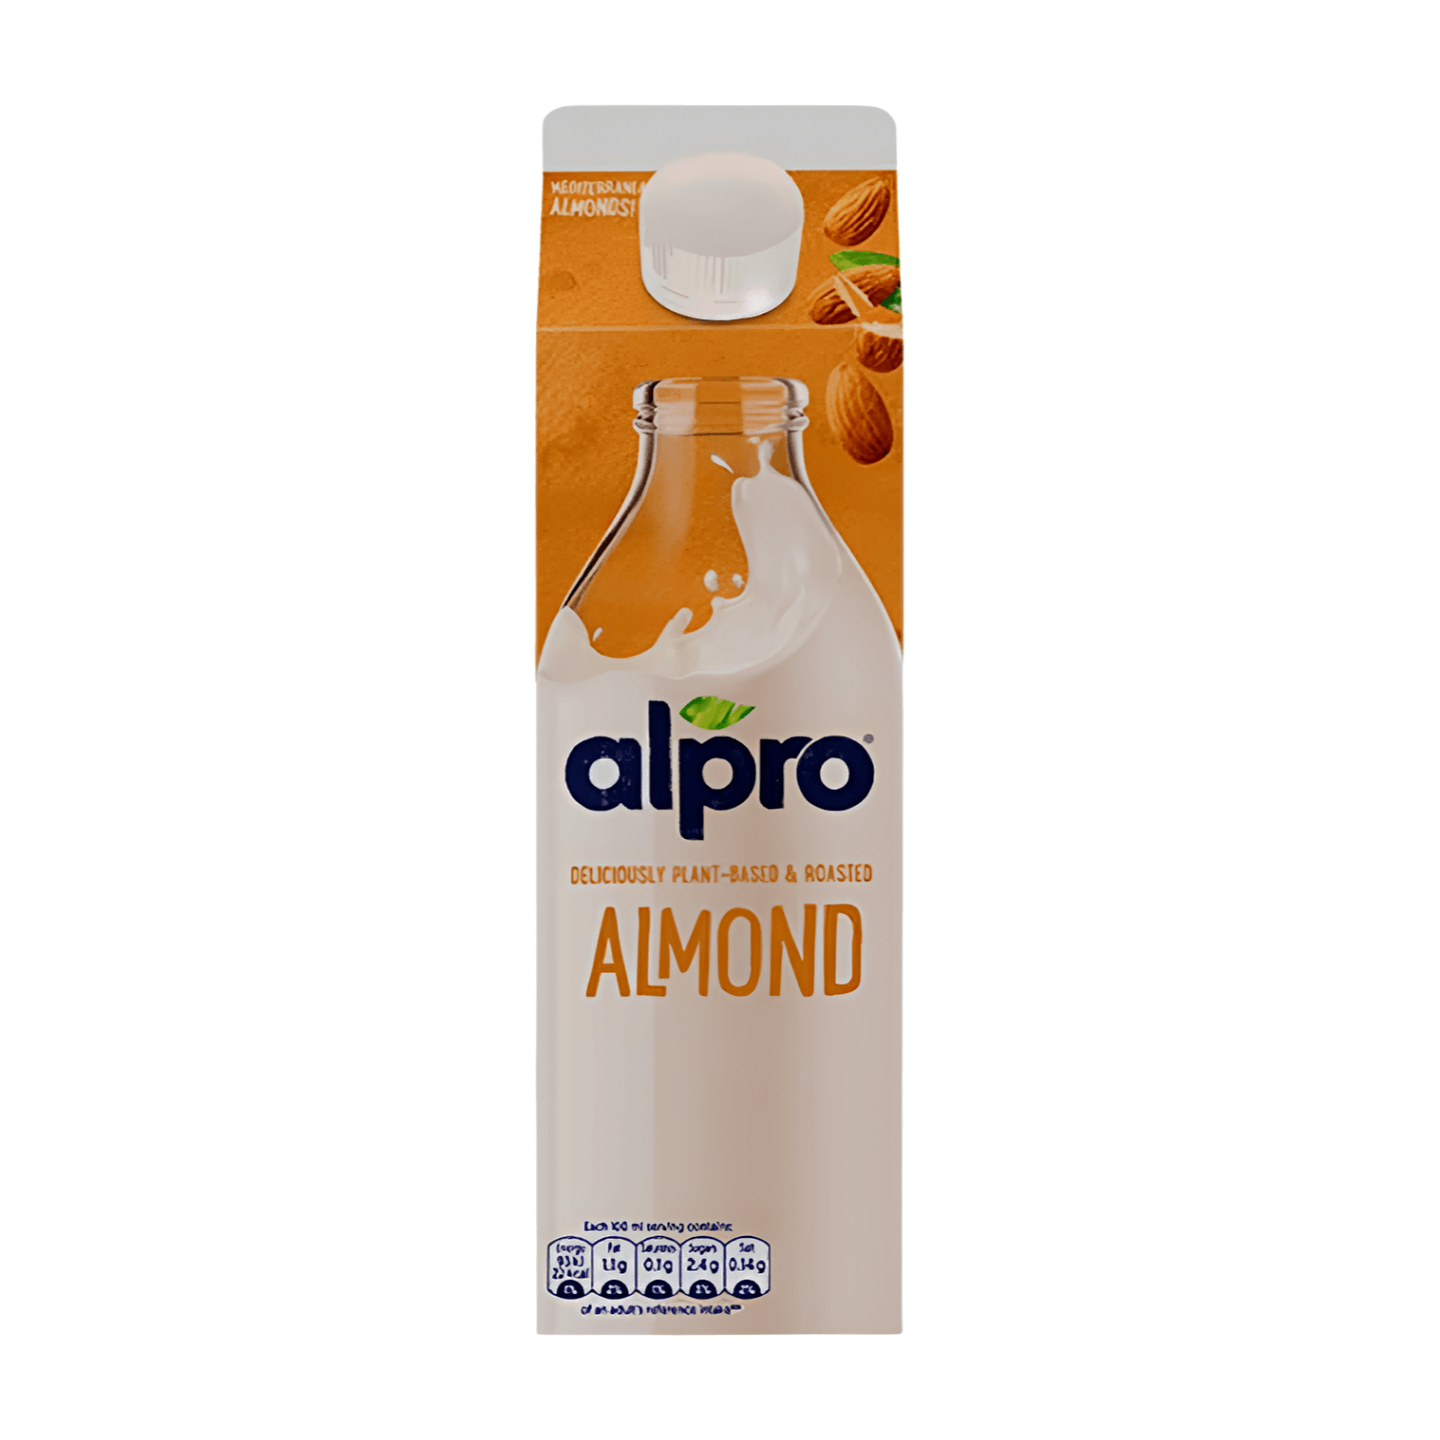 Alpro Almond Original Chilled